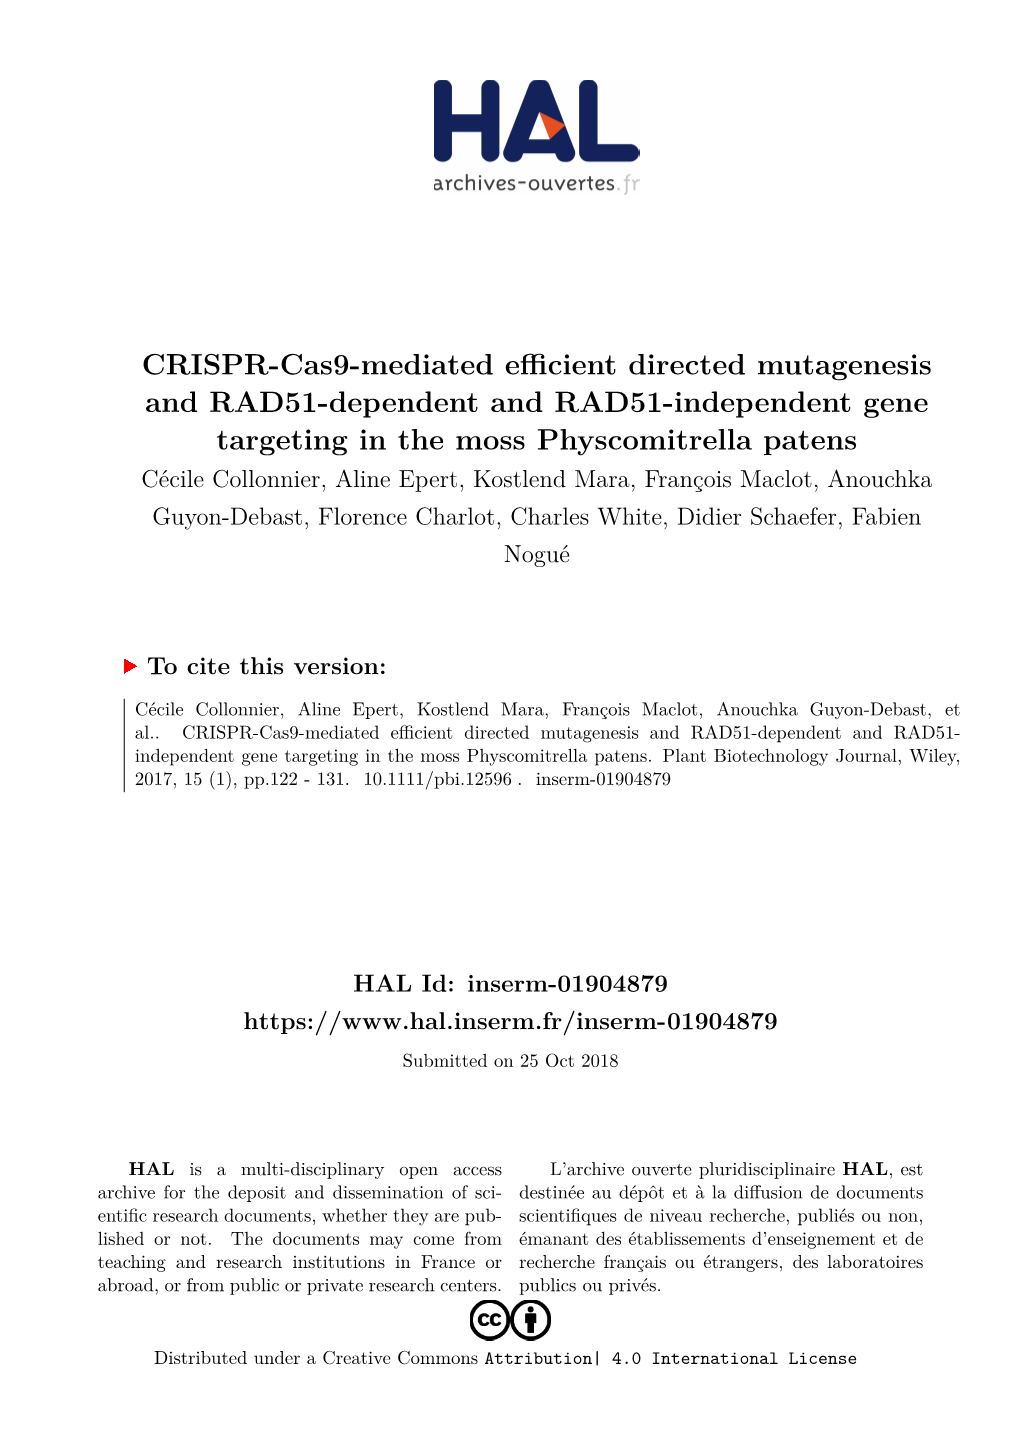 CRISPR-Cas9-Mediated Efficient Directed Mutagenesis and RAD51